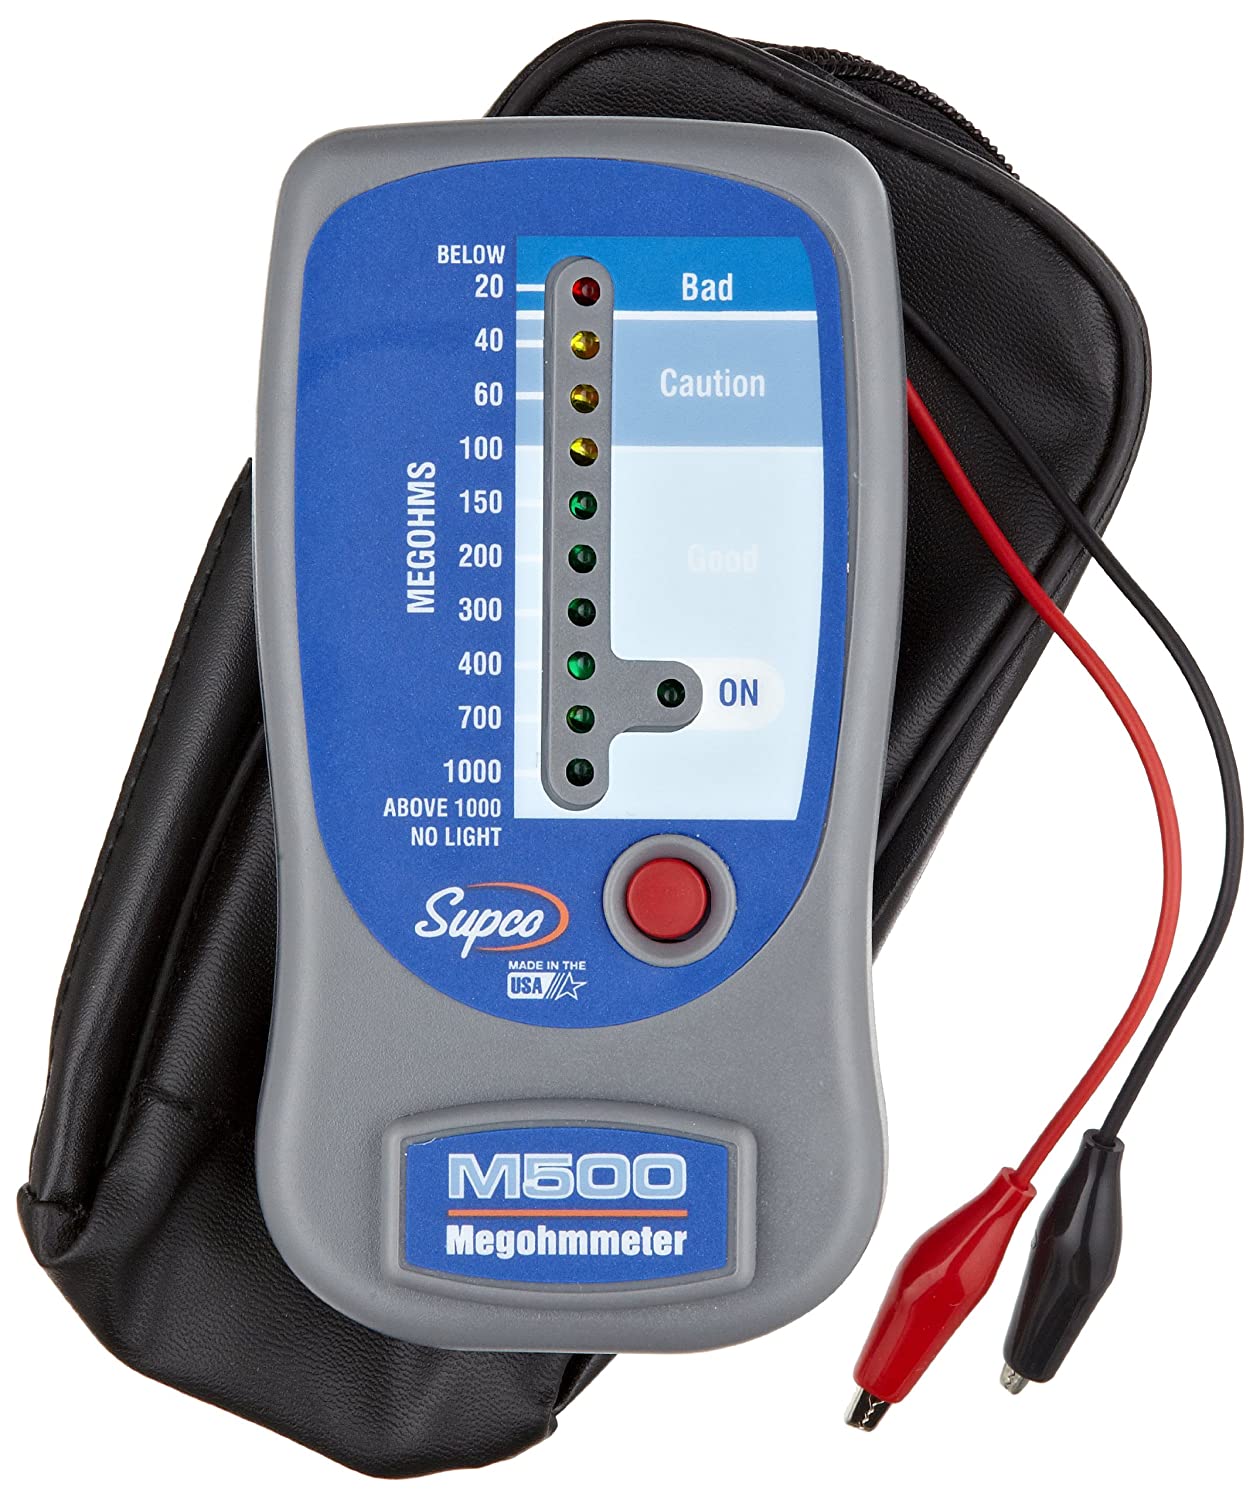 Supco M500 Insulation Tester/Electronic Megohmmeter